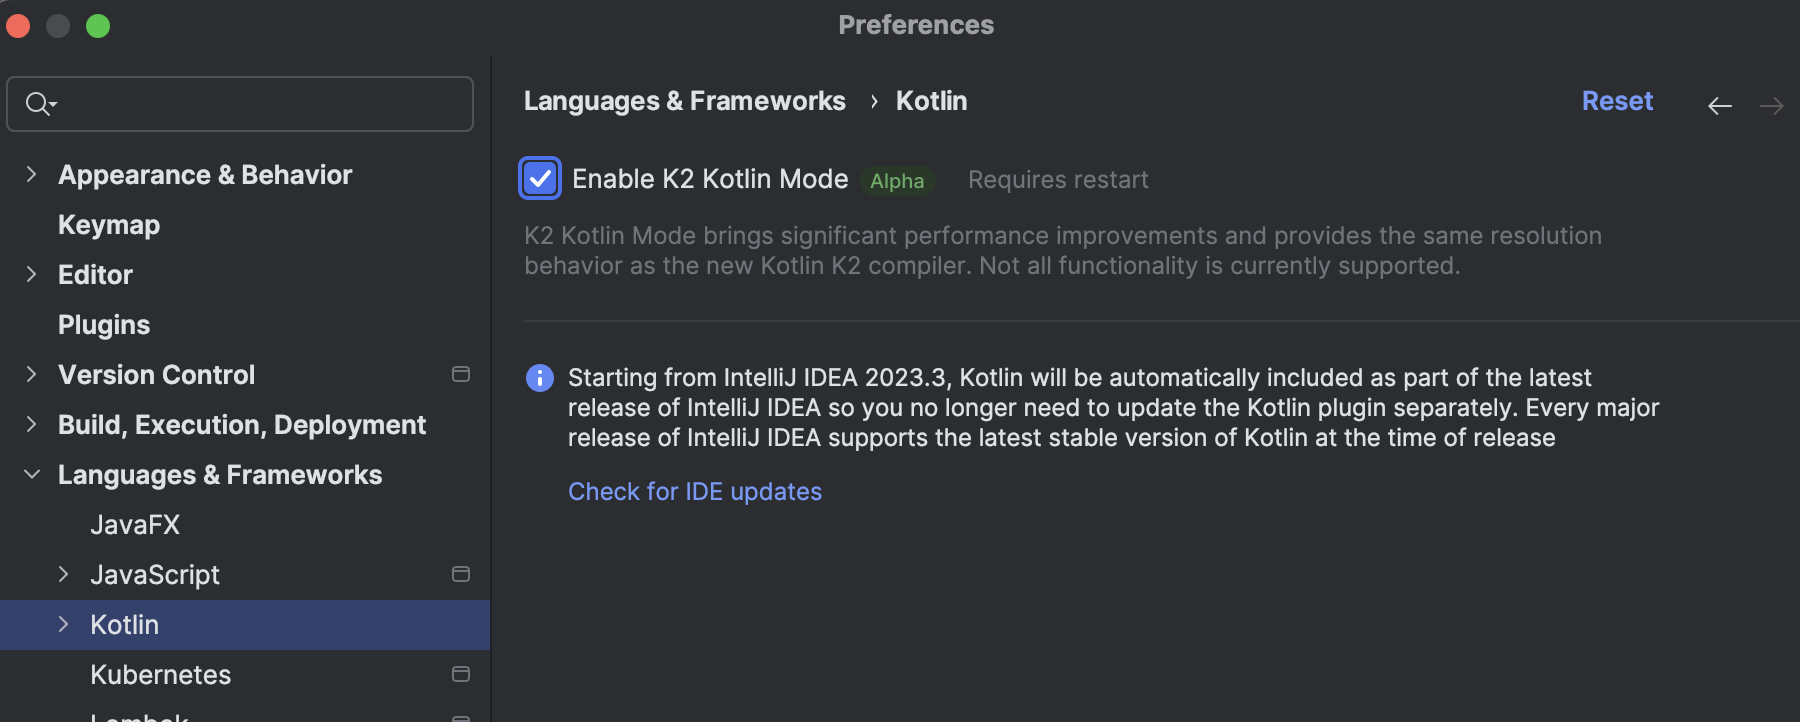 How to enable the Kotlin K2 Mode in IntelliJ IDEA